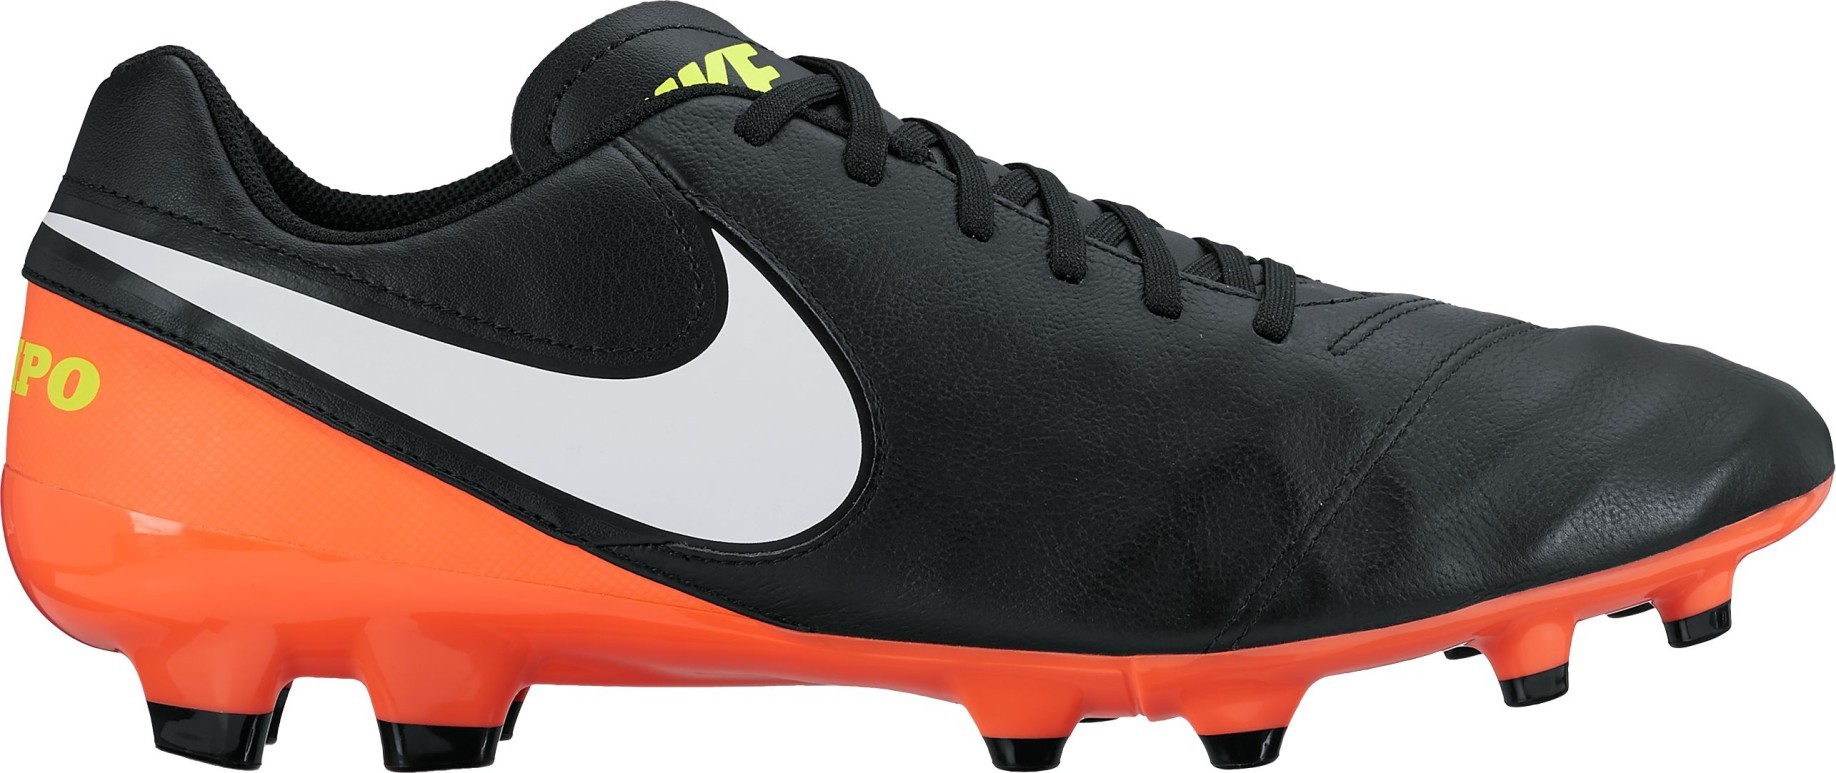 Recurso maquinilla de afeitar longitud Botas de fútbol Nike Tiempo Genio Leather FG II para colore negro naranja -  Nike - SportIT.com